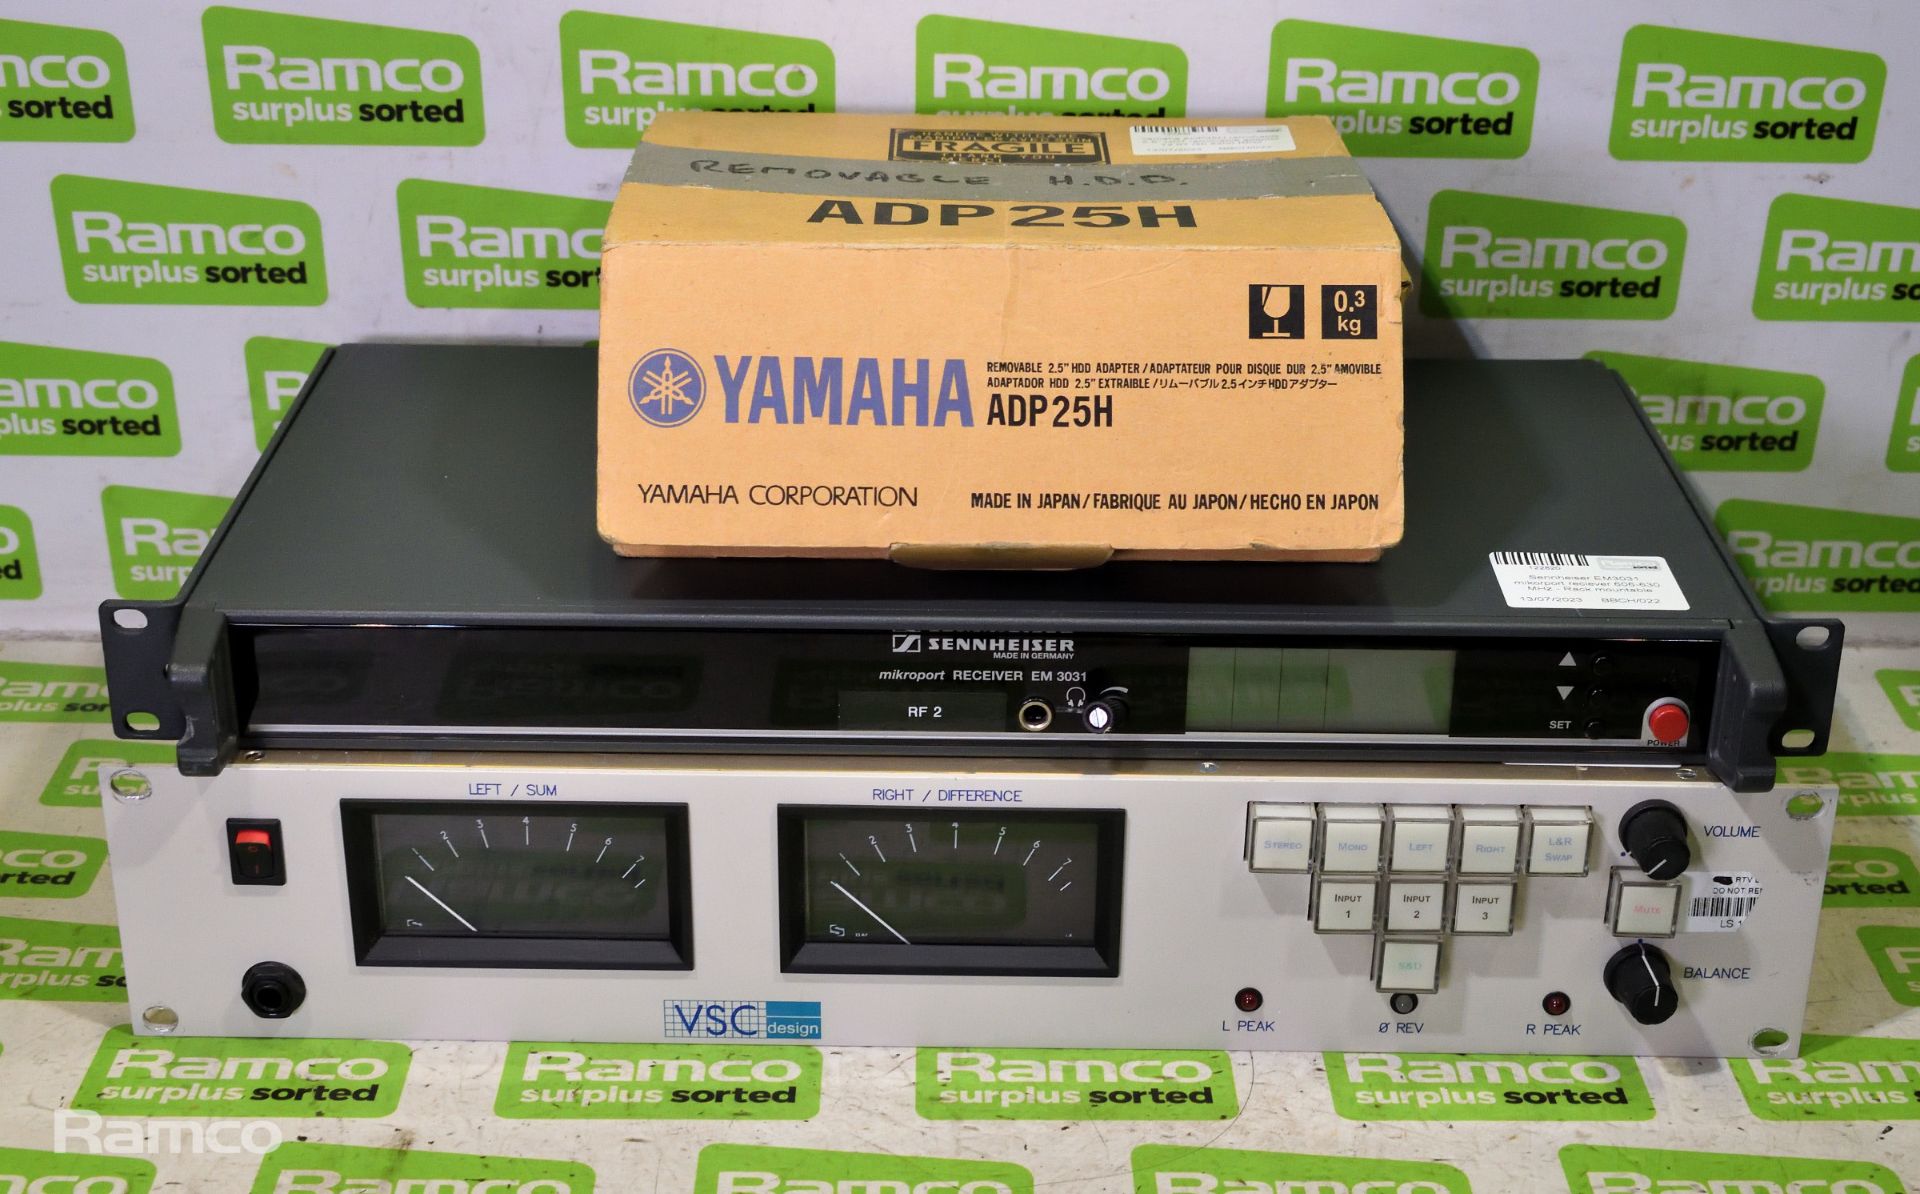 Sennheiser EM3031 mikroport receiver 606-630 MHz - Rack mountable, Yamaha ADP25H removable 2.5 inch